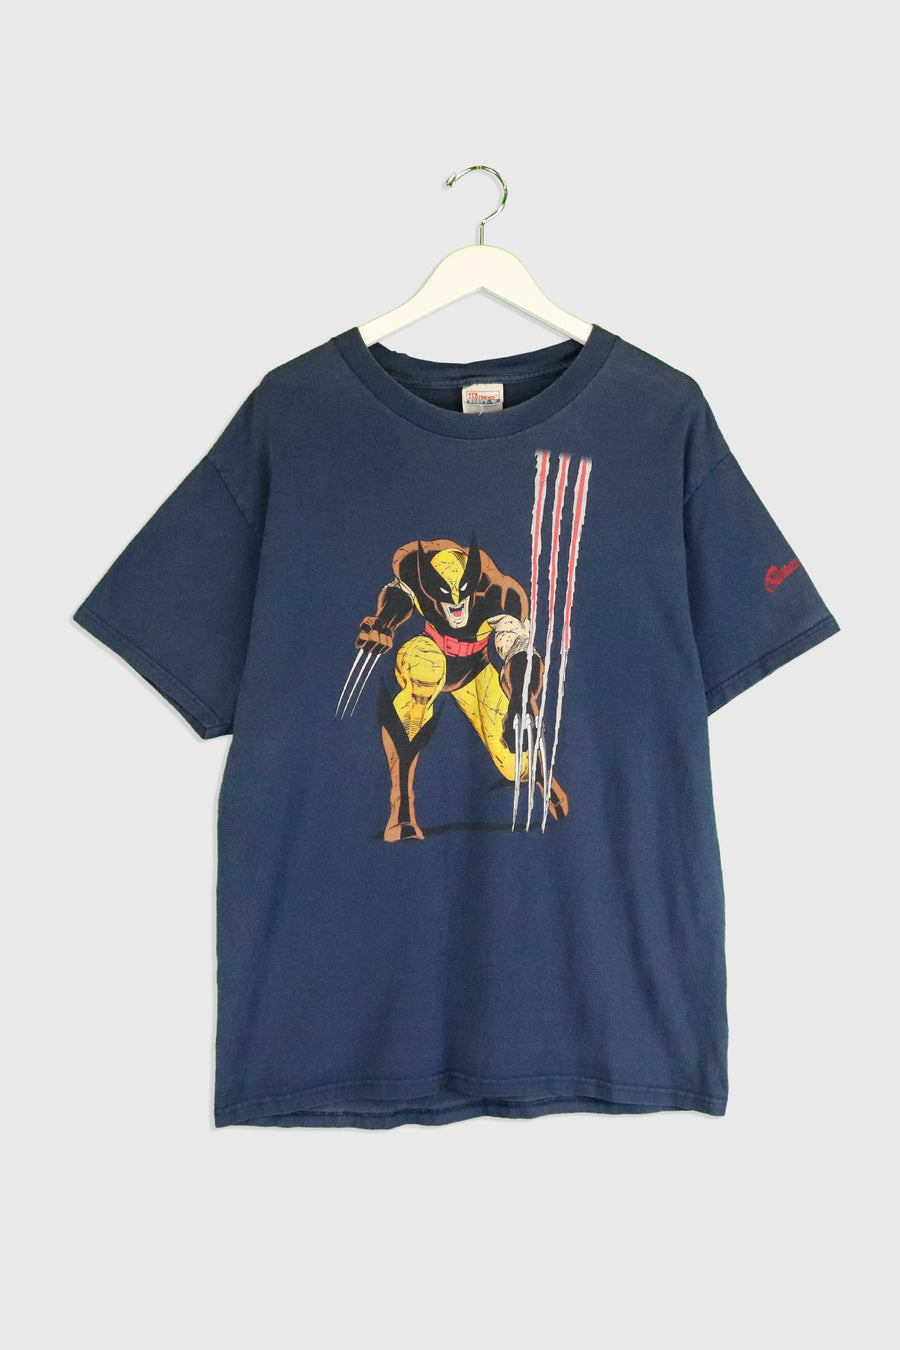 Vintage Marvel Wolverine Claws Slashing Vinyl T Shirt Sz L